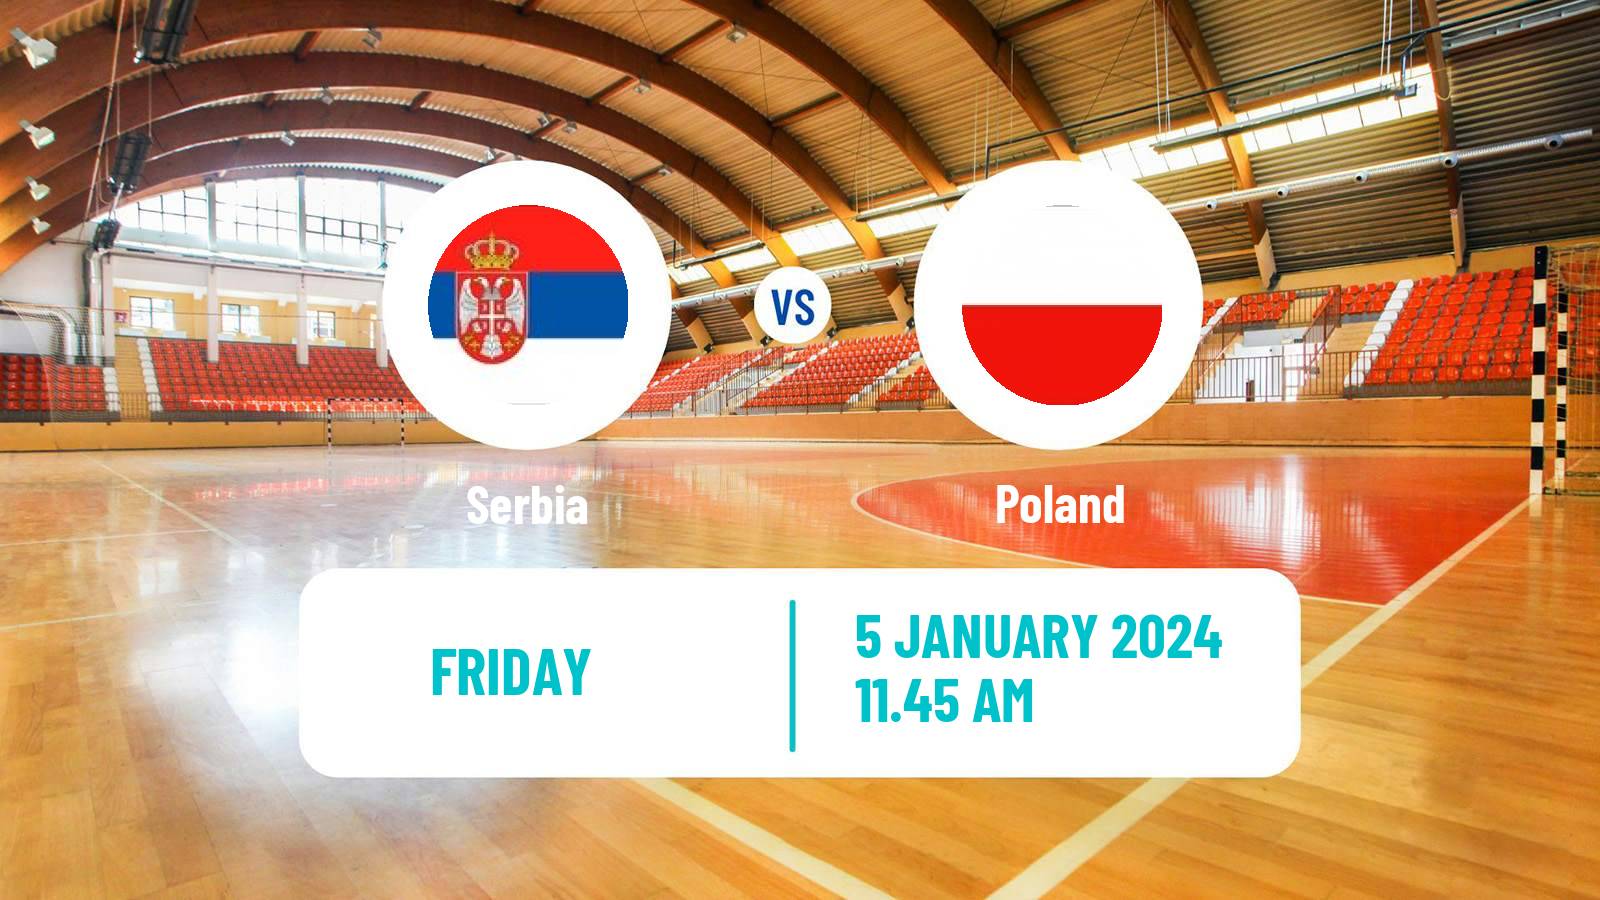 Handball Friendly International Handball Serbia - Poland